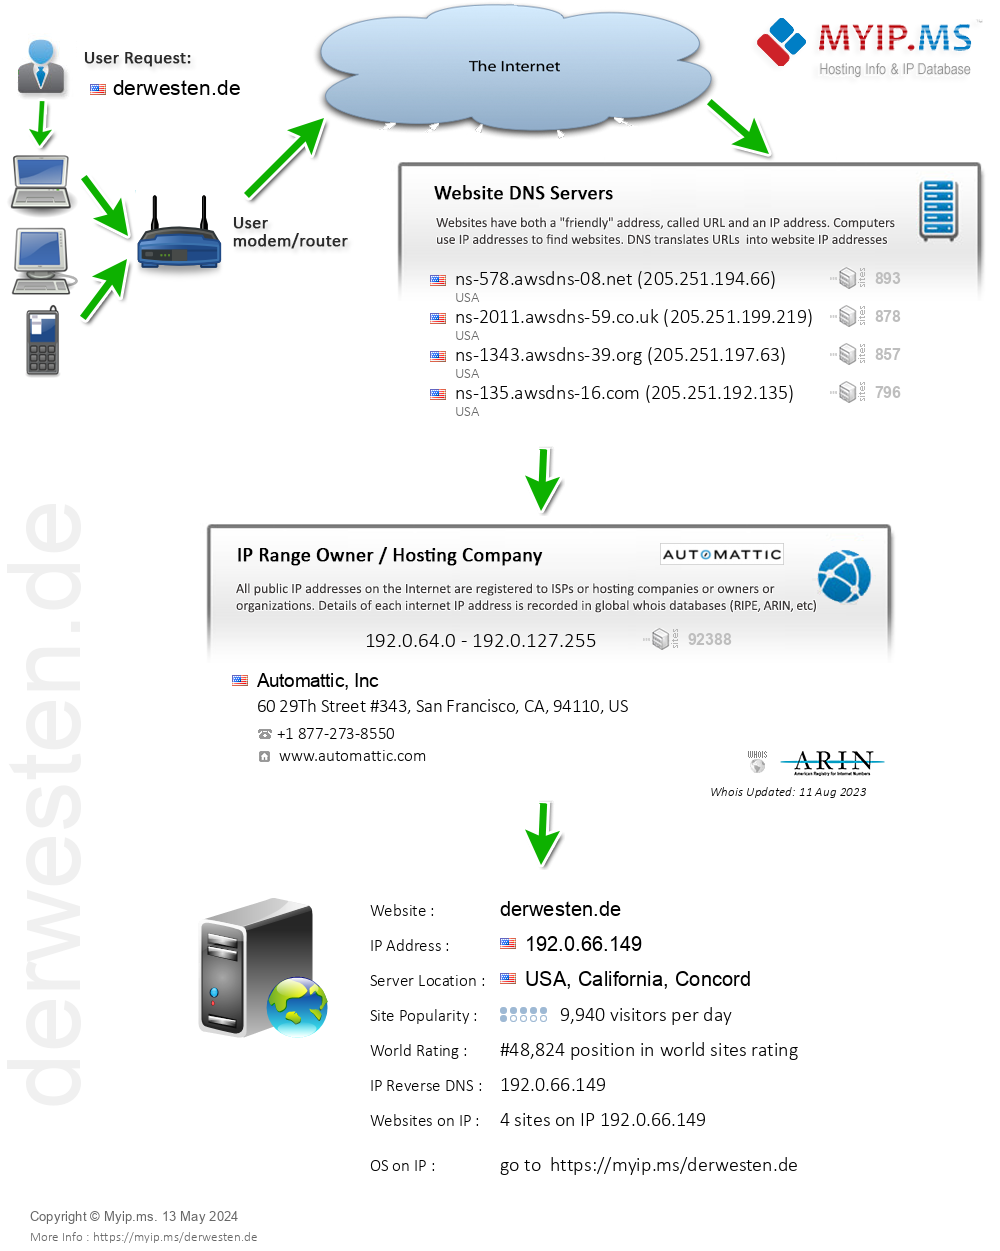 Derwesten.de - Website Hosting Visual IP Diagram